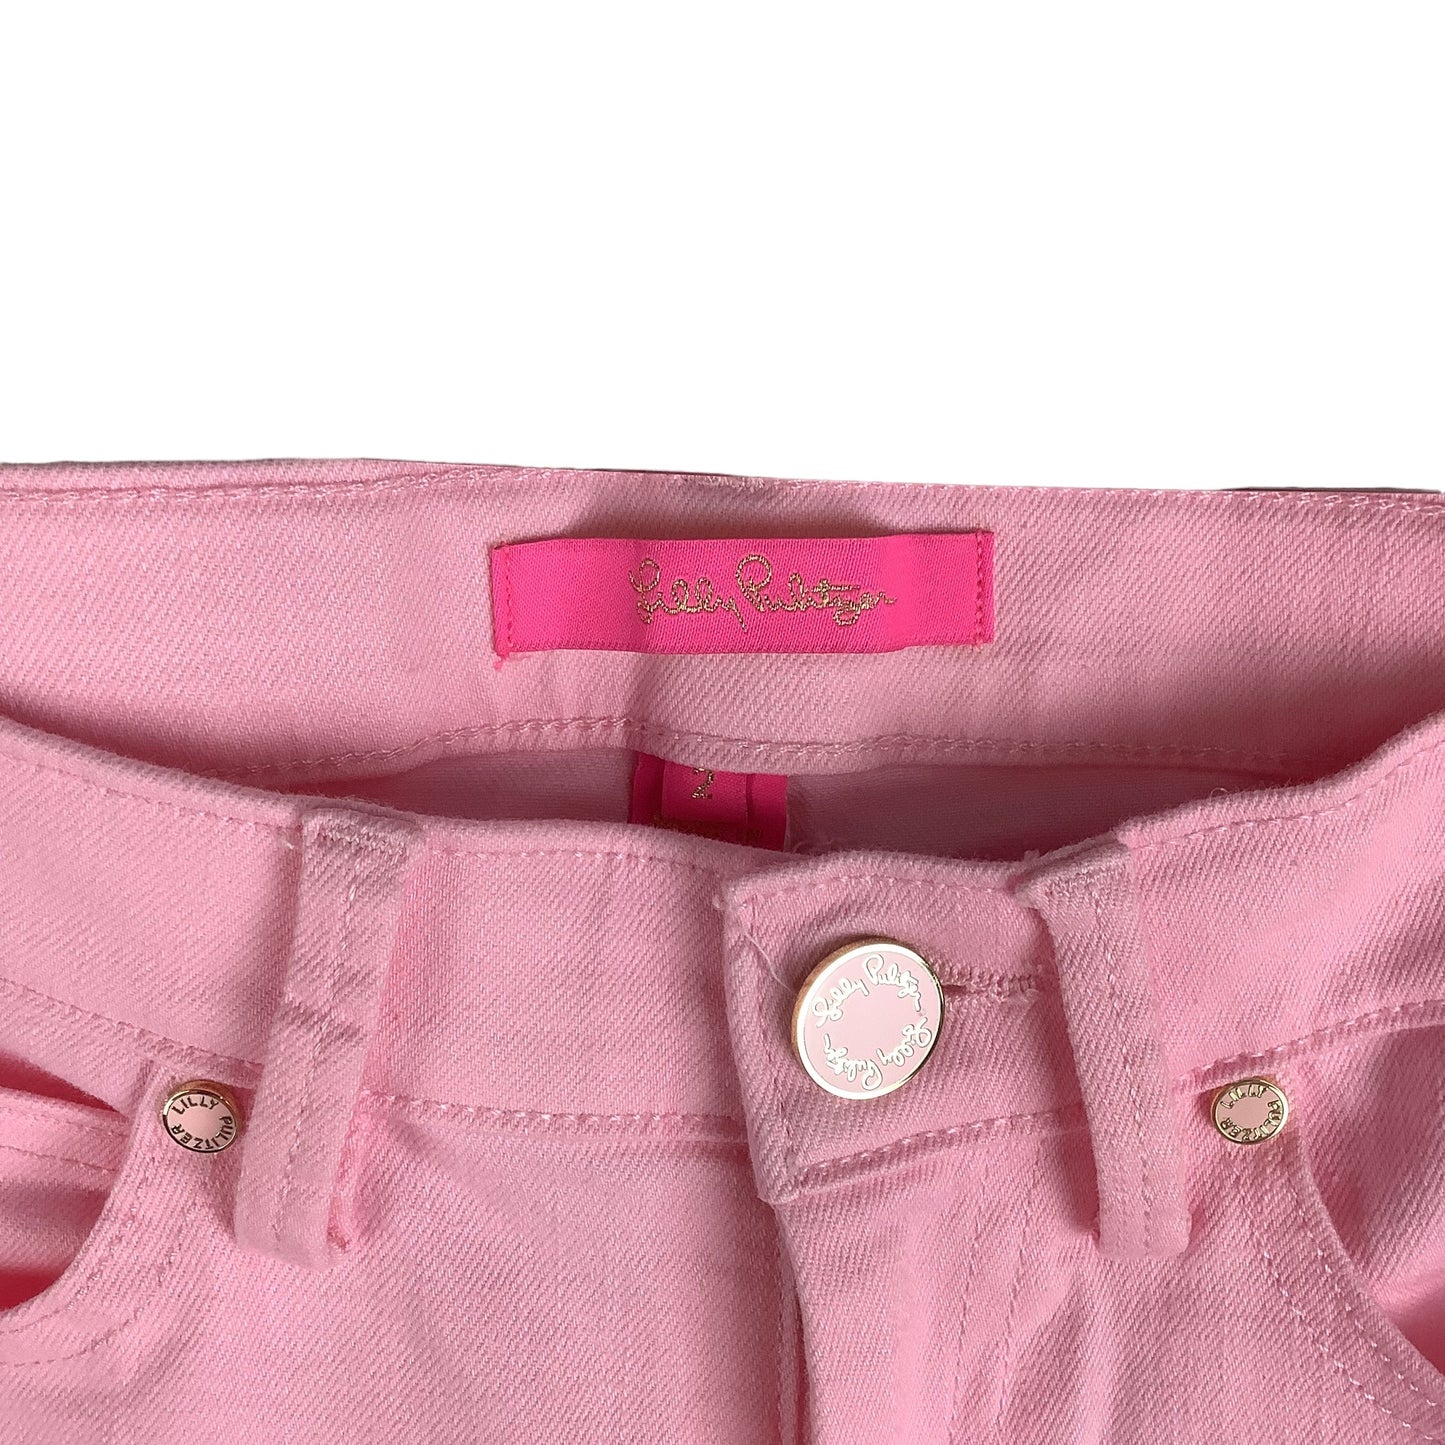 Pink Pants Designer Lilly Pulitzer, Size 2